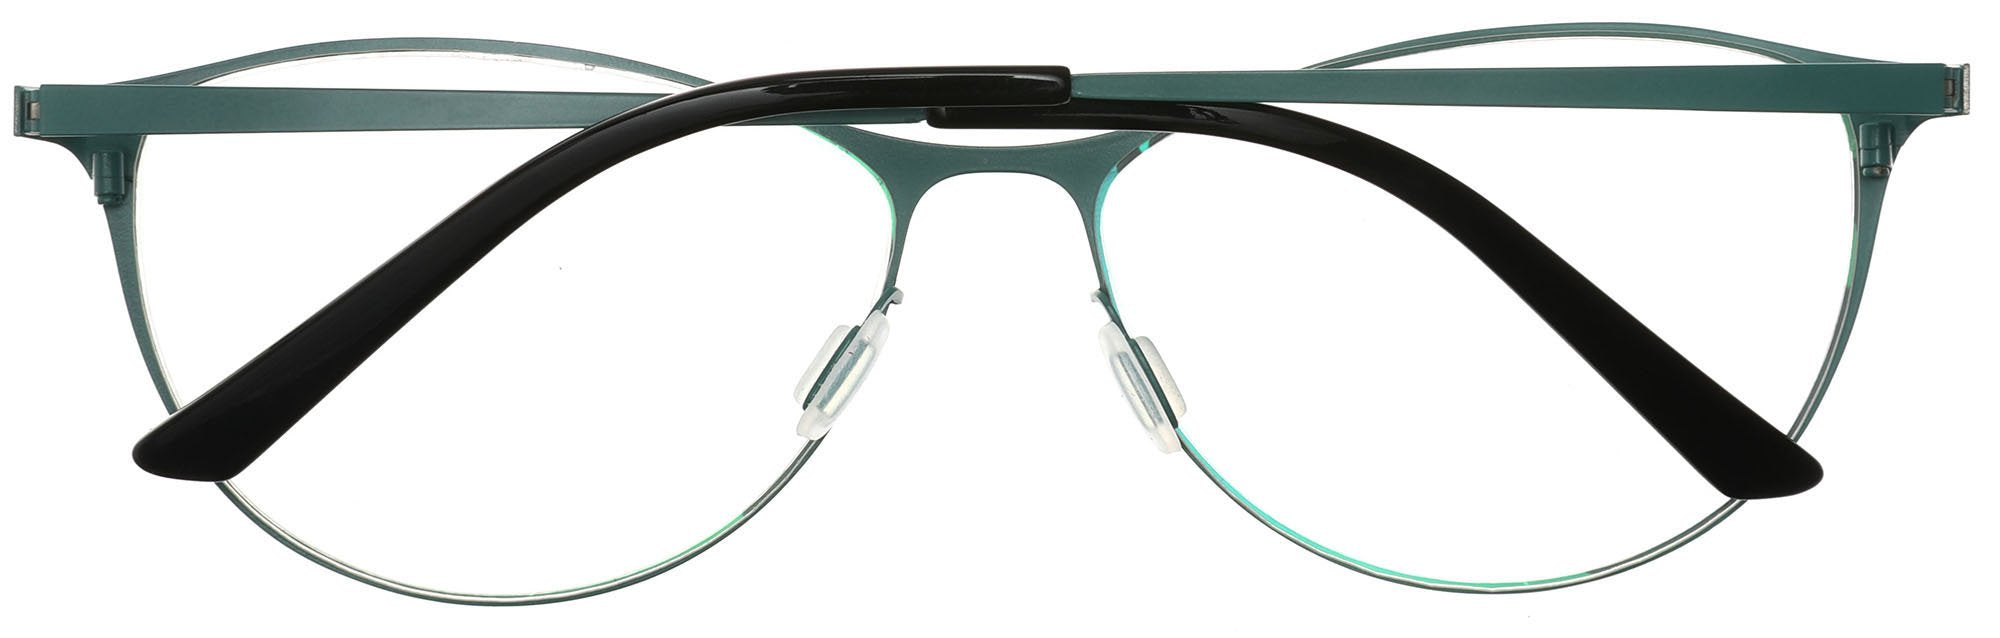 Tango Optics Metal Cateye Optical Eyeglasses Frame Flexible Stainless Steel Green For Prescription Lens-Samba Shades